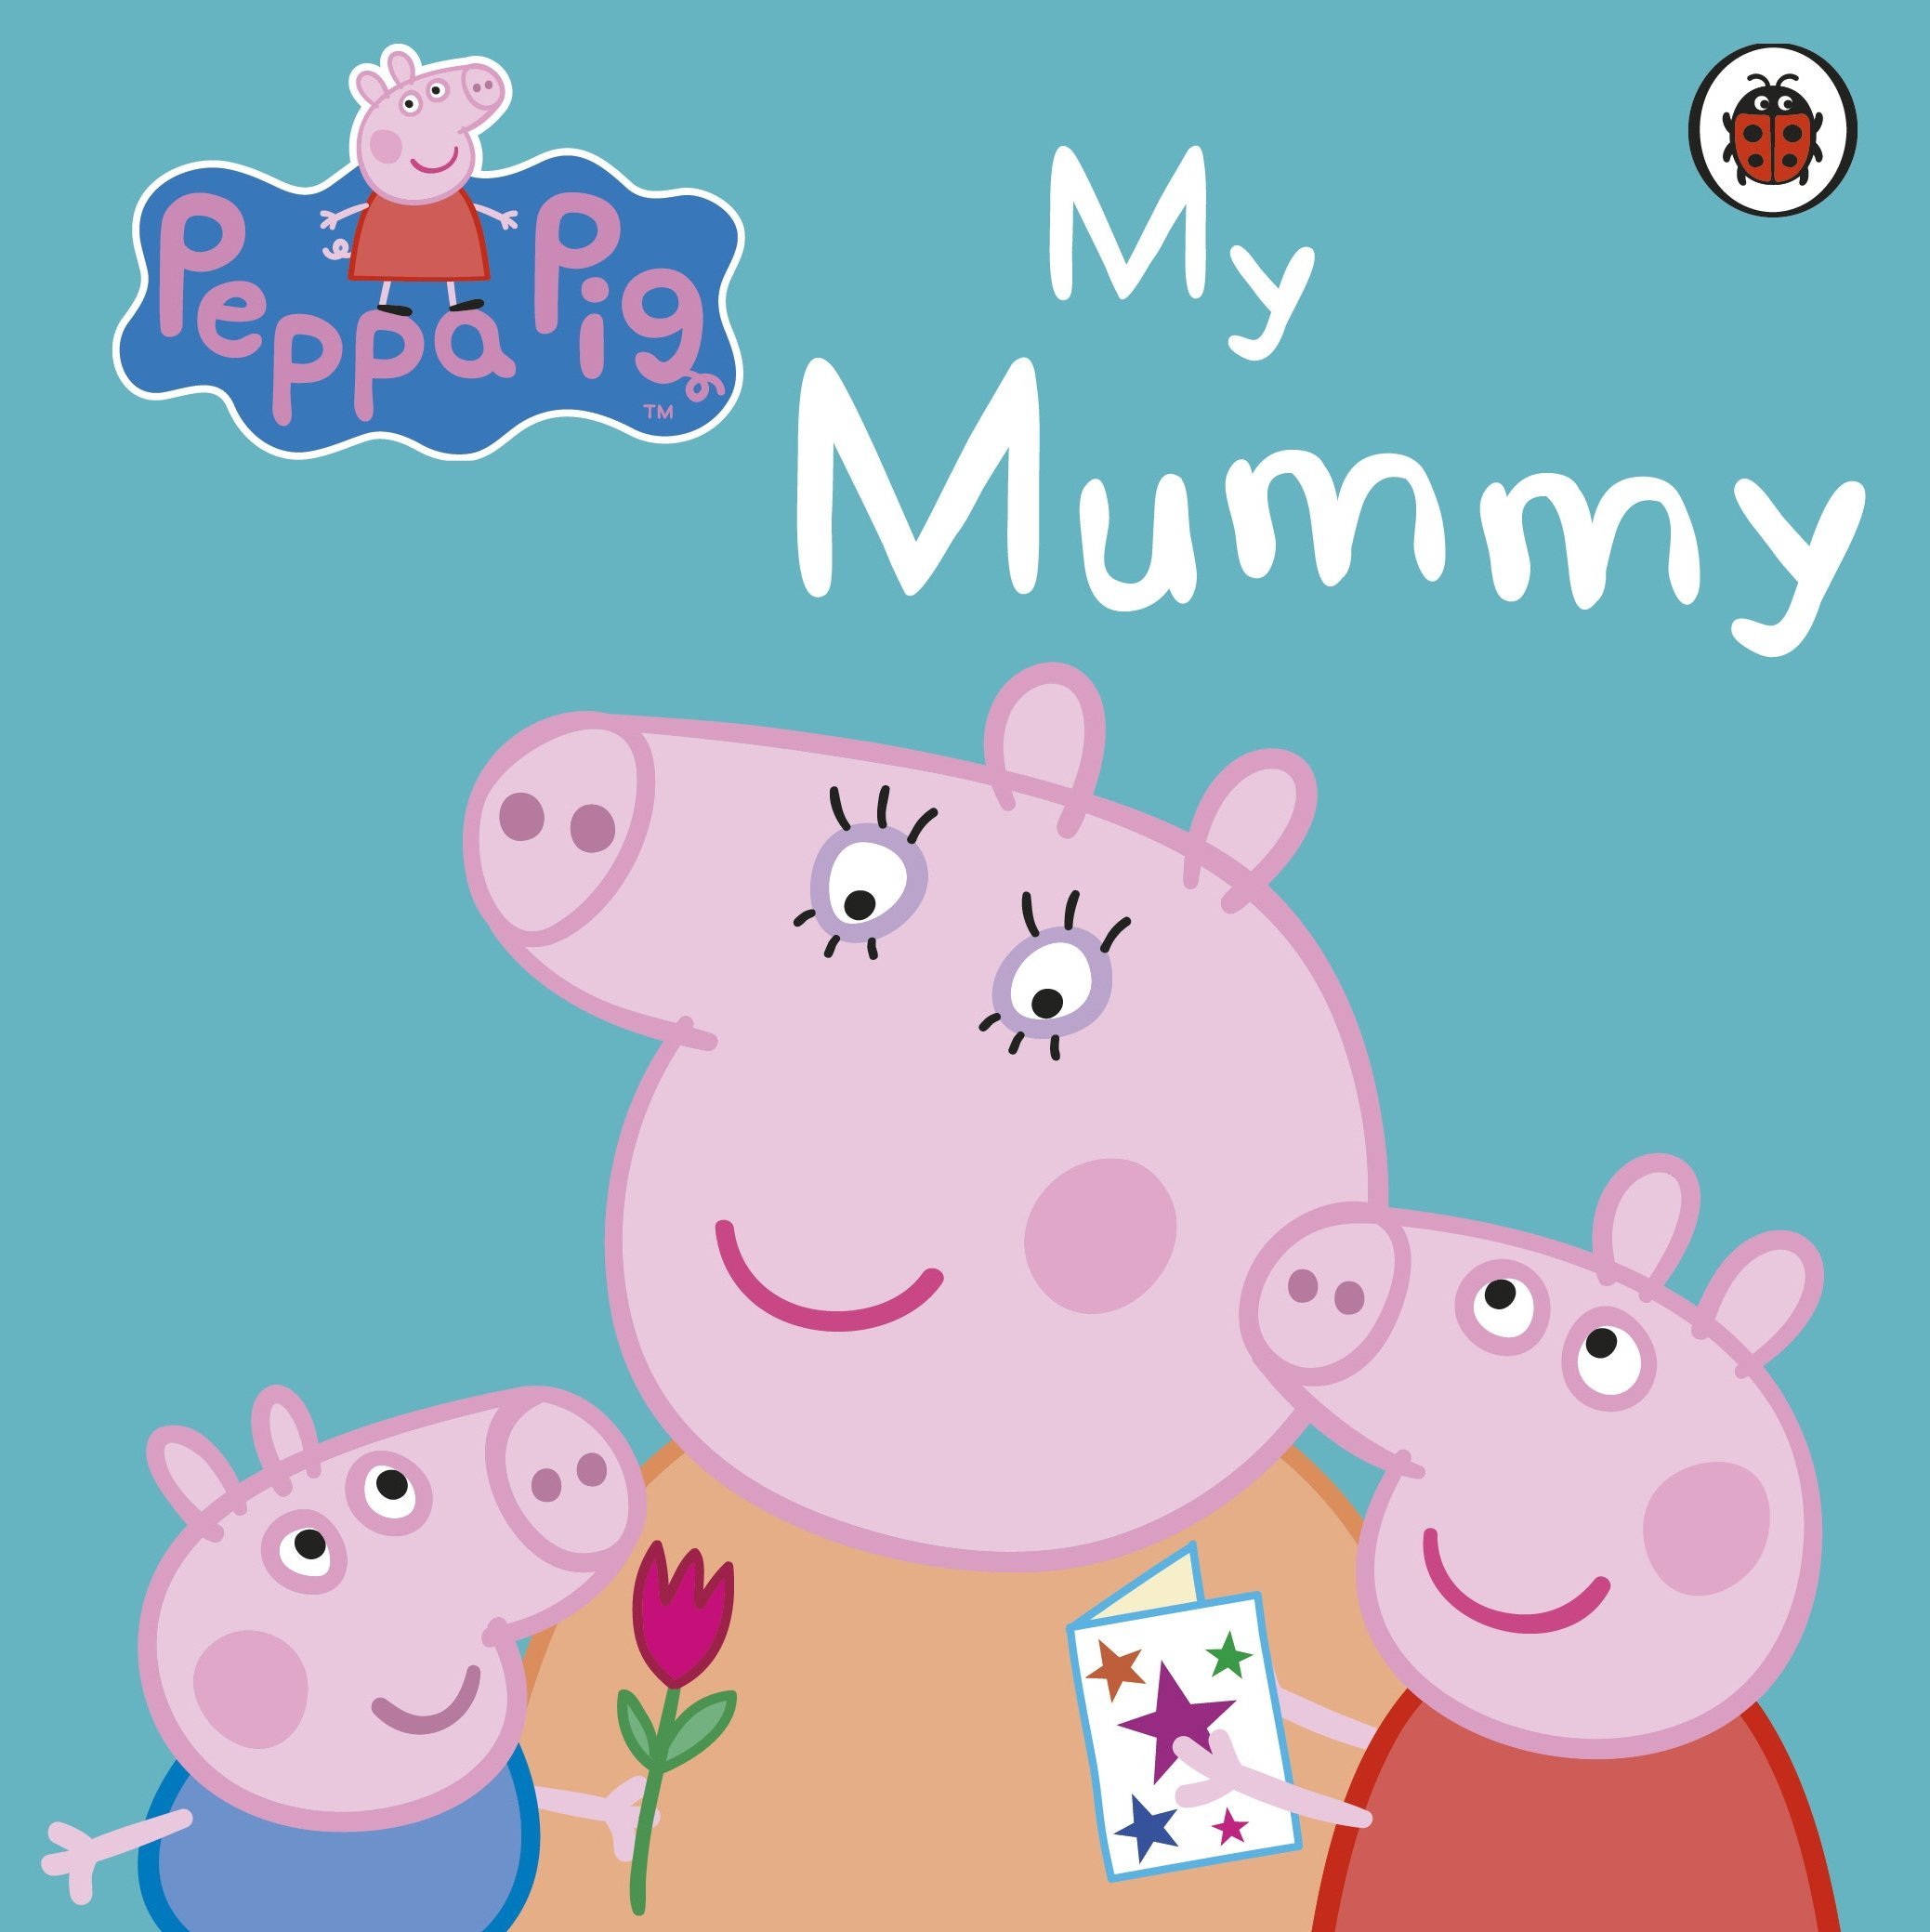 Peppa Pig #4